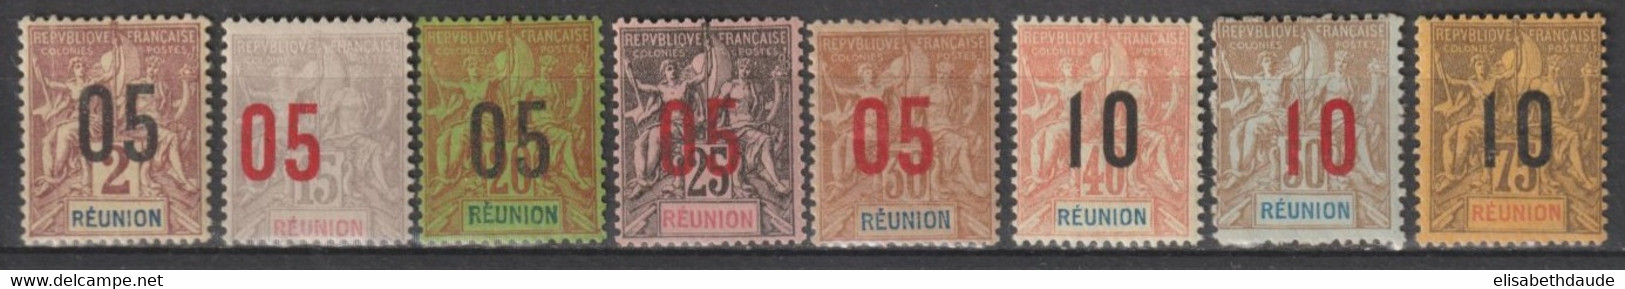 REUNION - 1912 - SERIE COMPLETE - YVERT N° 72/79 * MH (BELLE VARIETE DENTELURE DU 78 !) - COTE = 30+ EUR. - - Nuevos